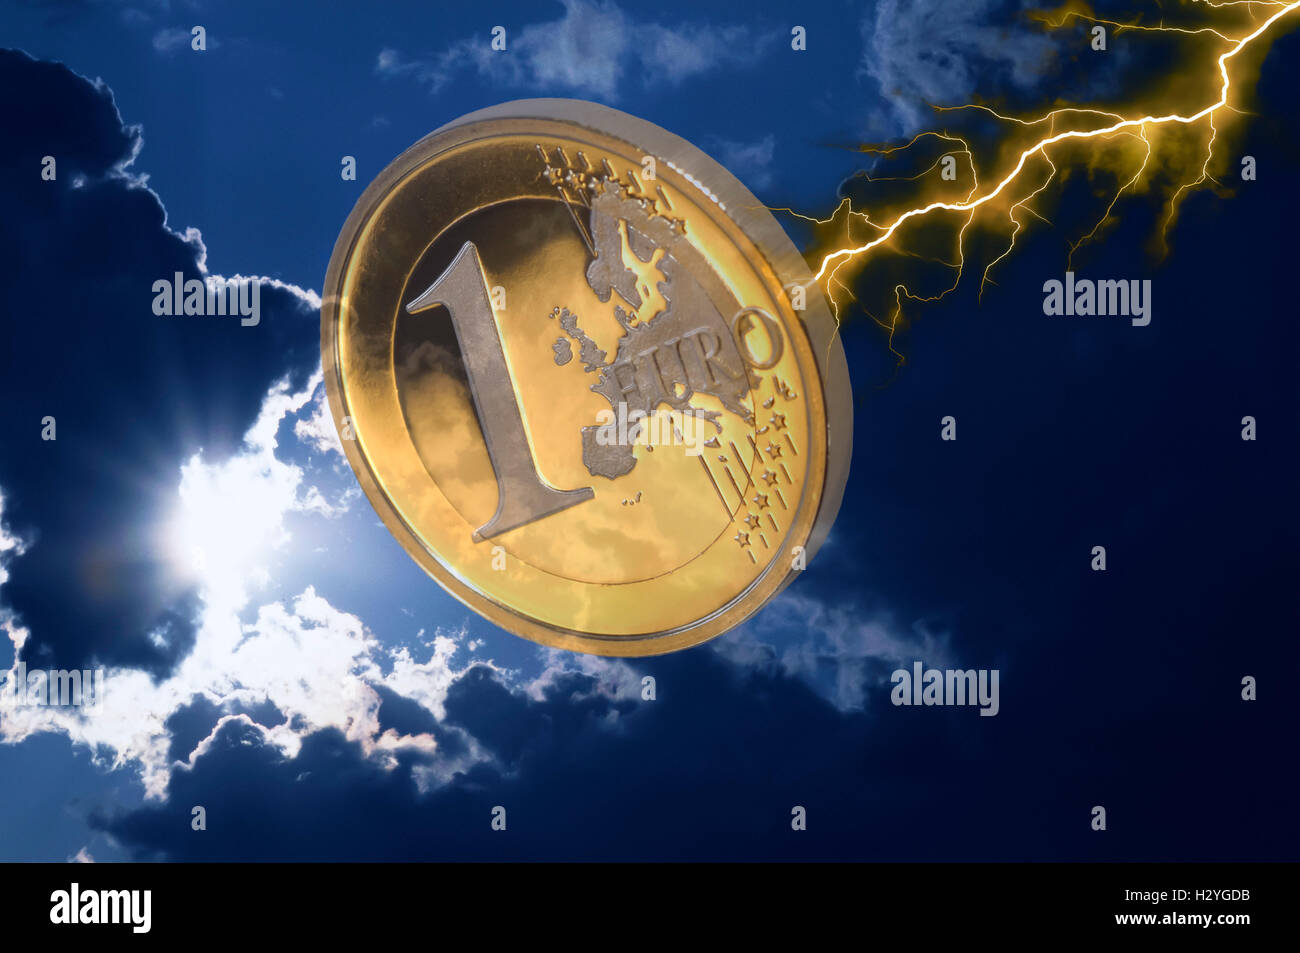 Euro, euro coin, lightning, storm clouds, financial crisis, financial market Stock Photo